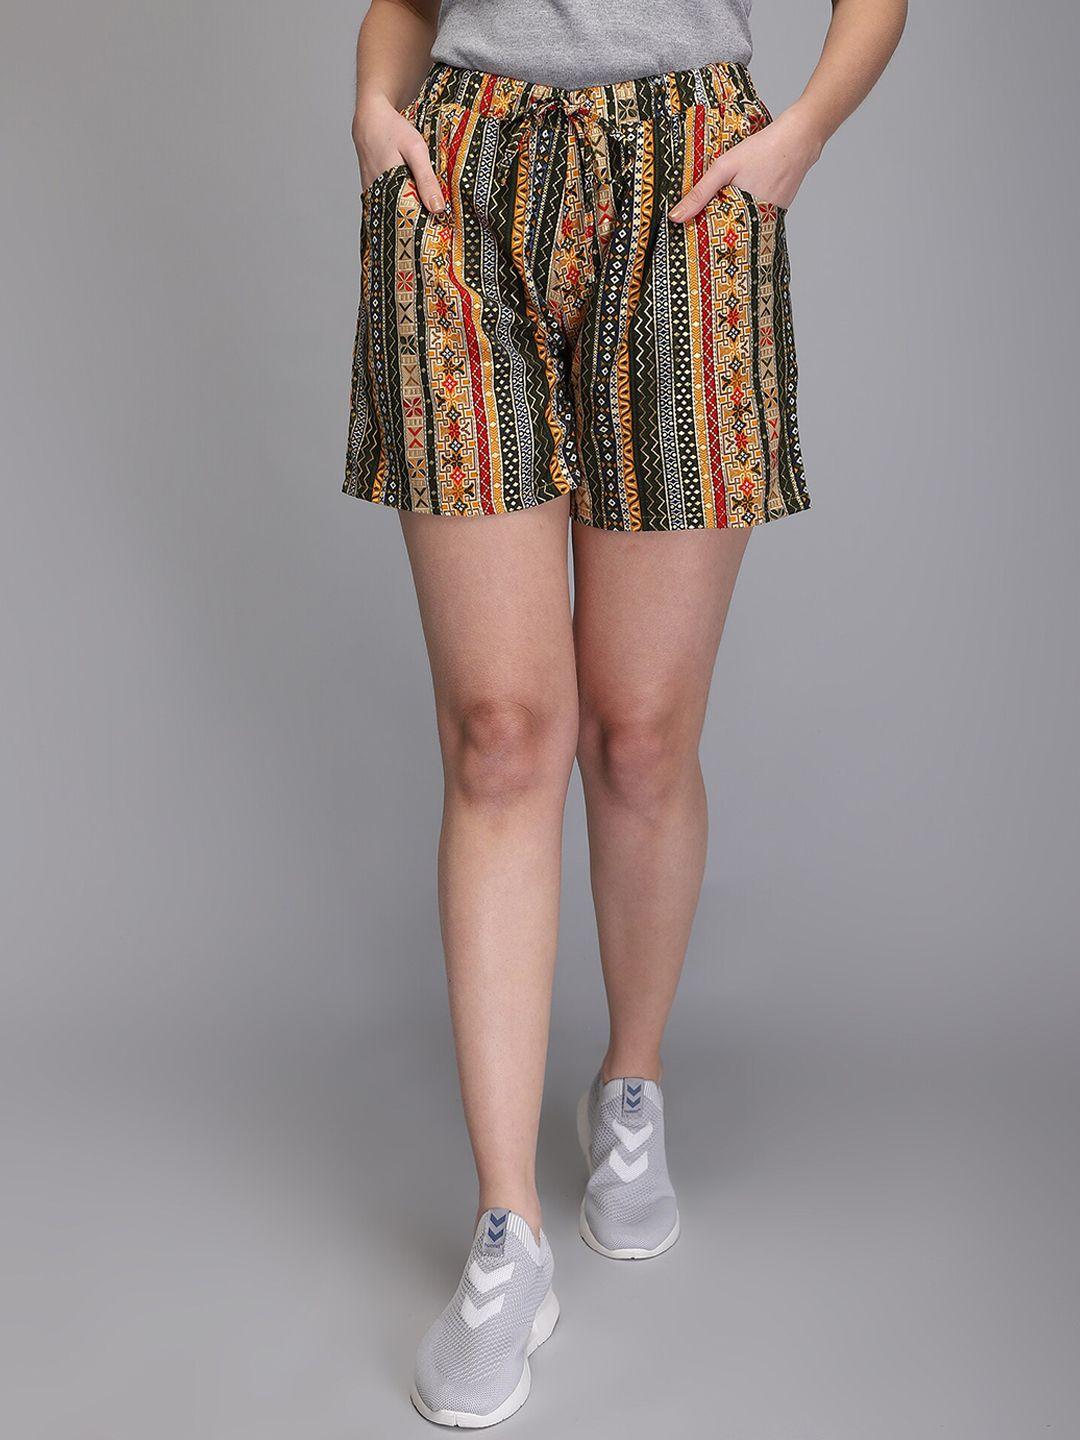 aditi-wasan-women-geometric-printed-shorts